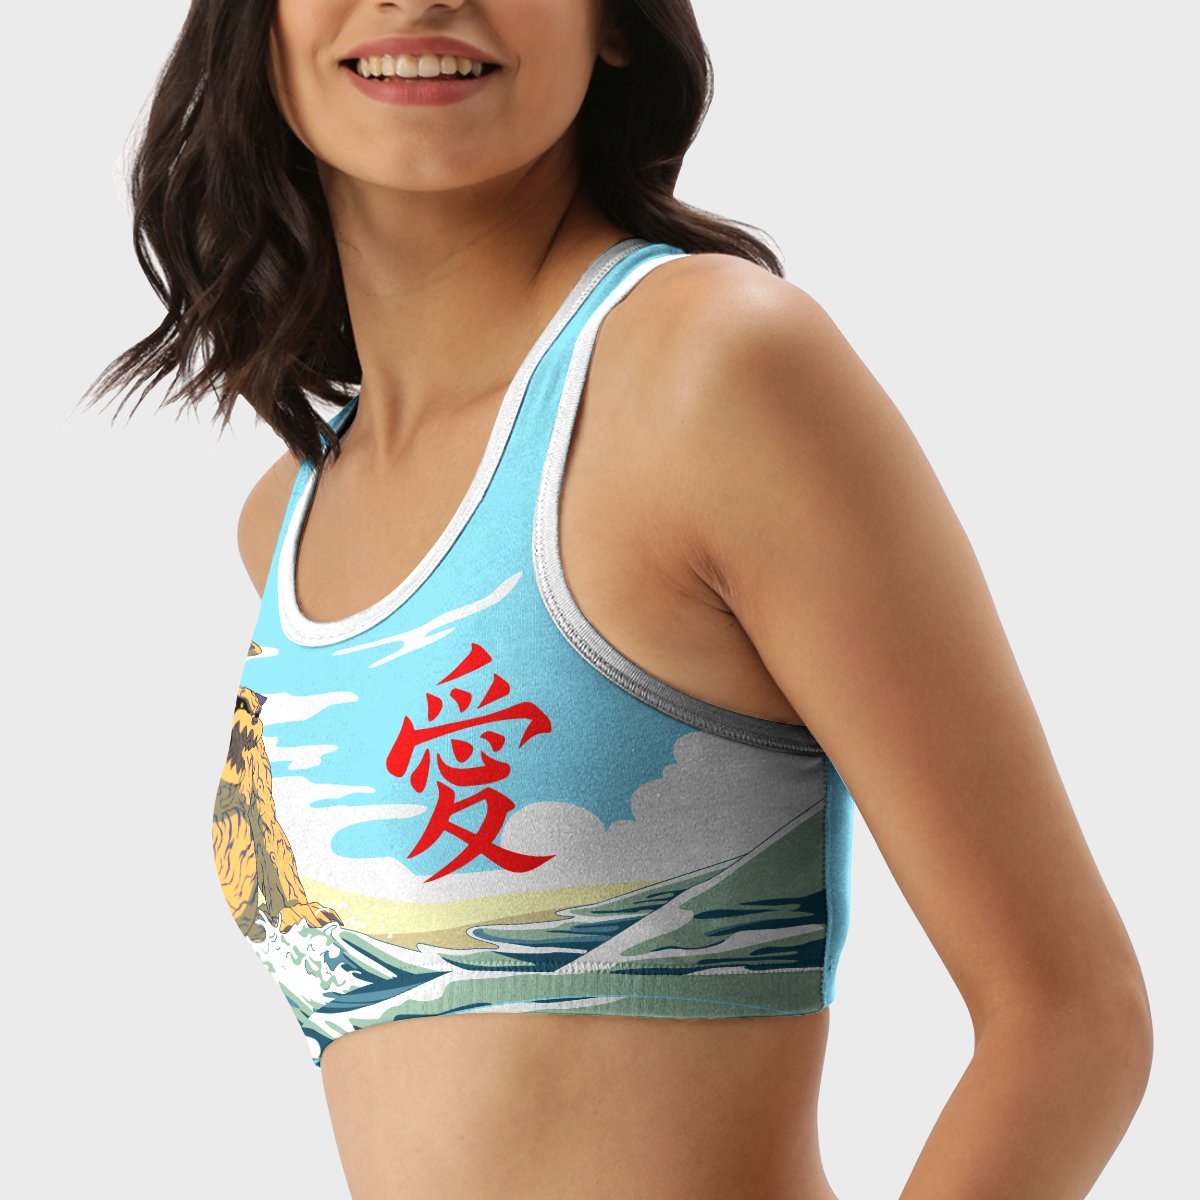 gaara summer active wear set 839991 - Anime Swimsuits